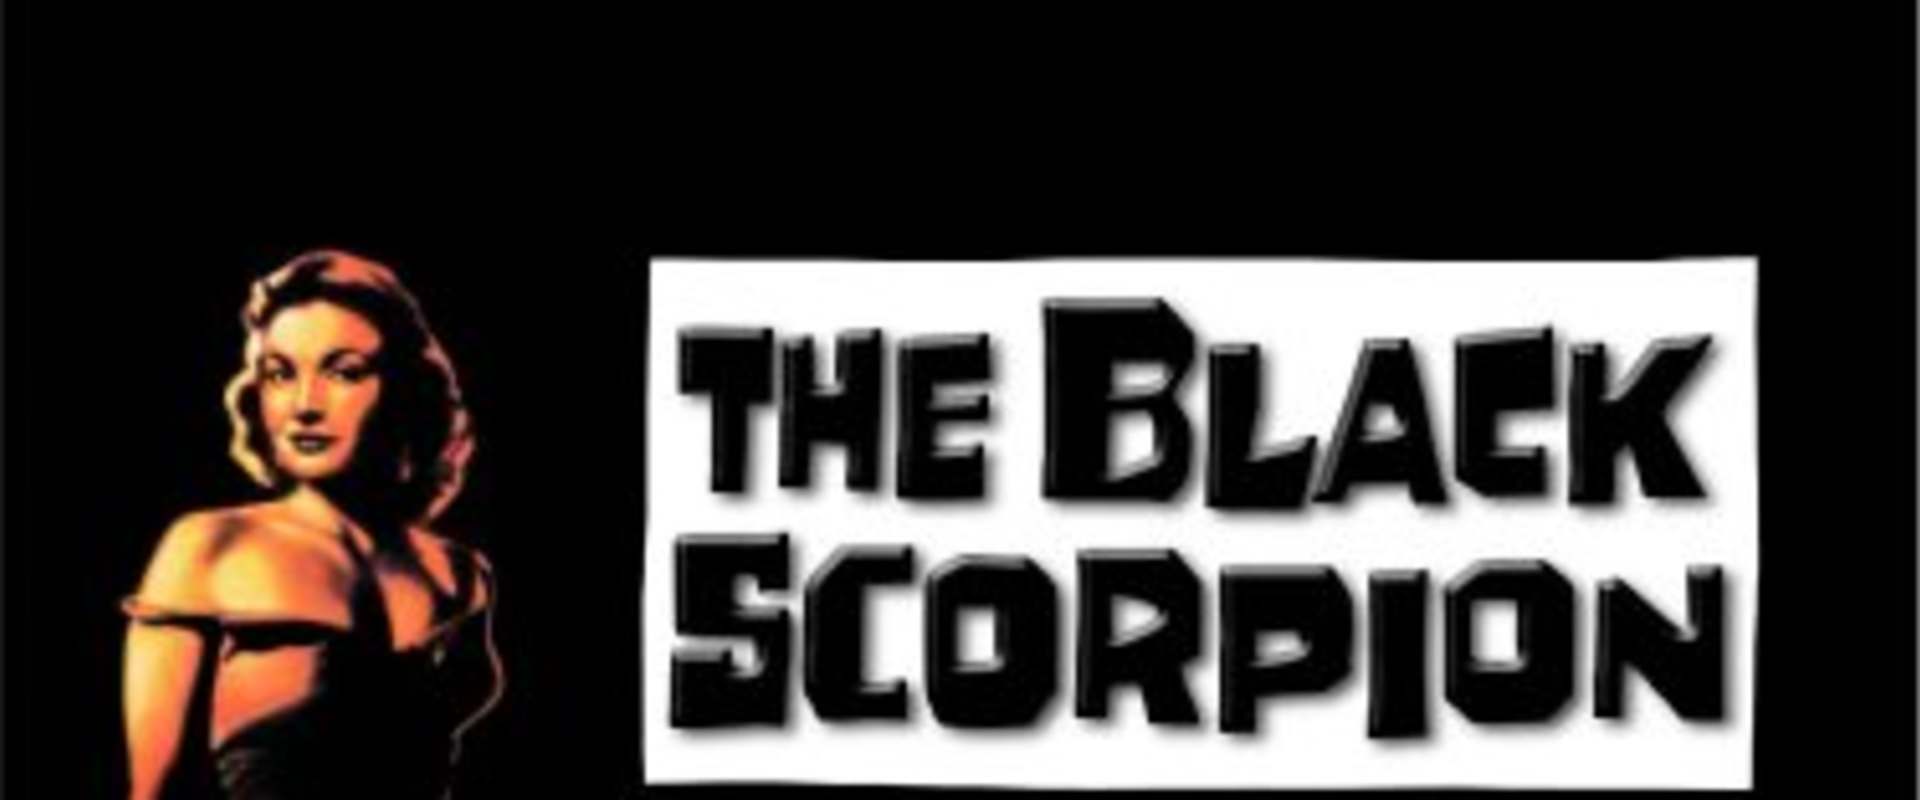 The Black Scorpion background 1